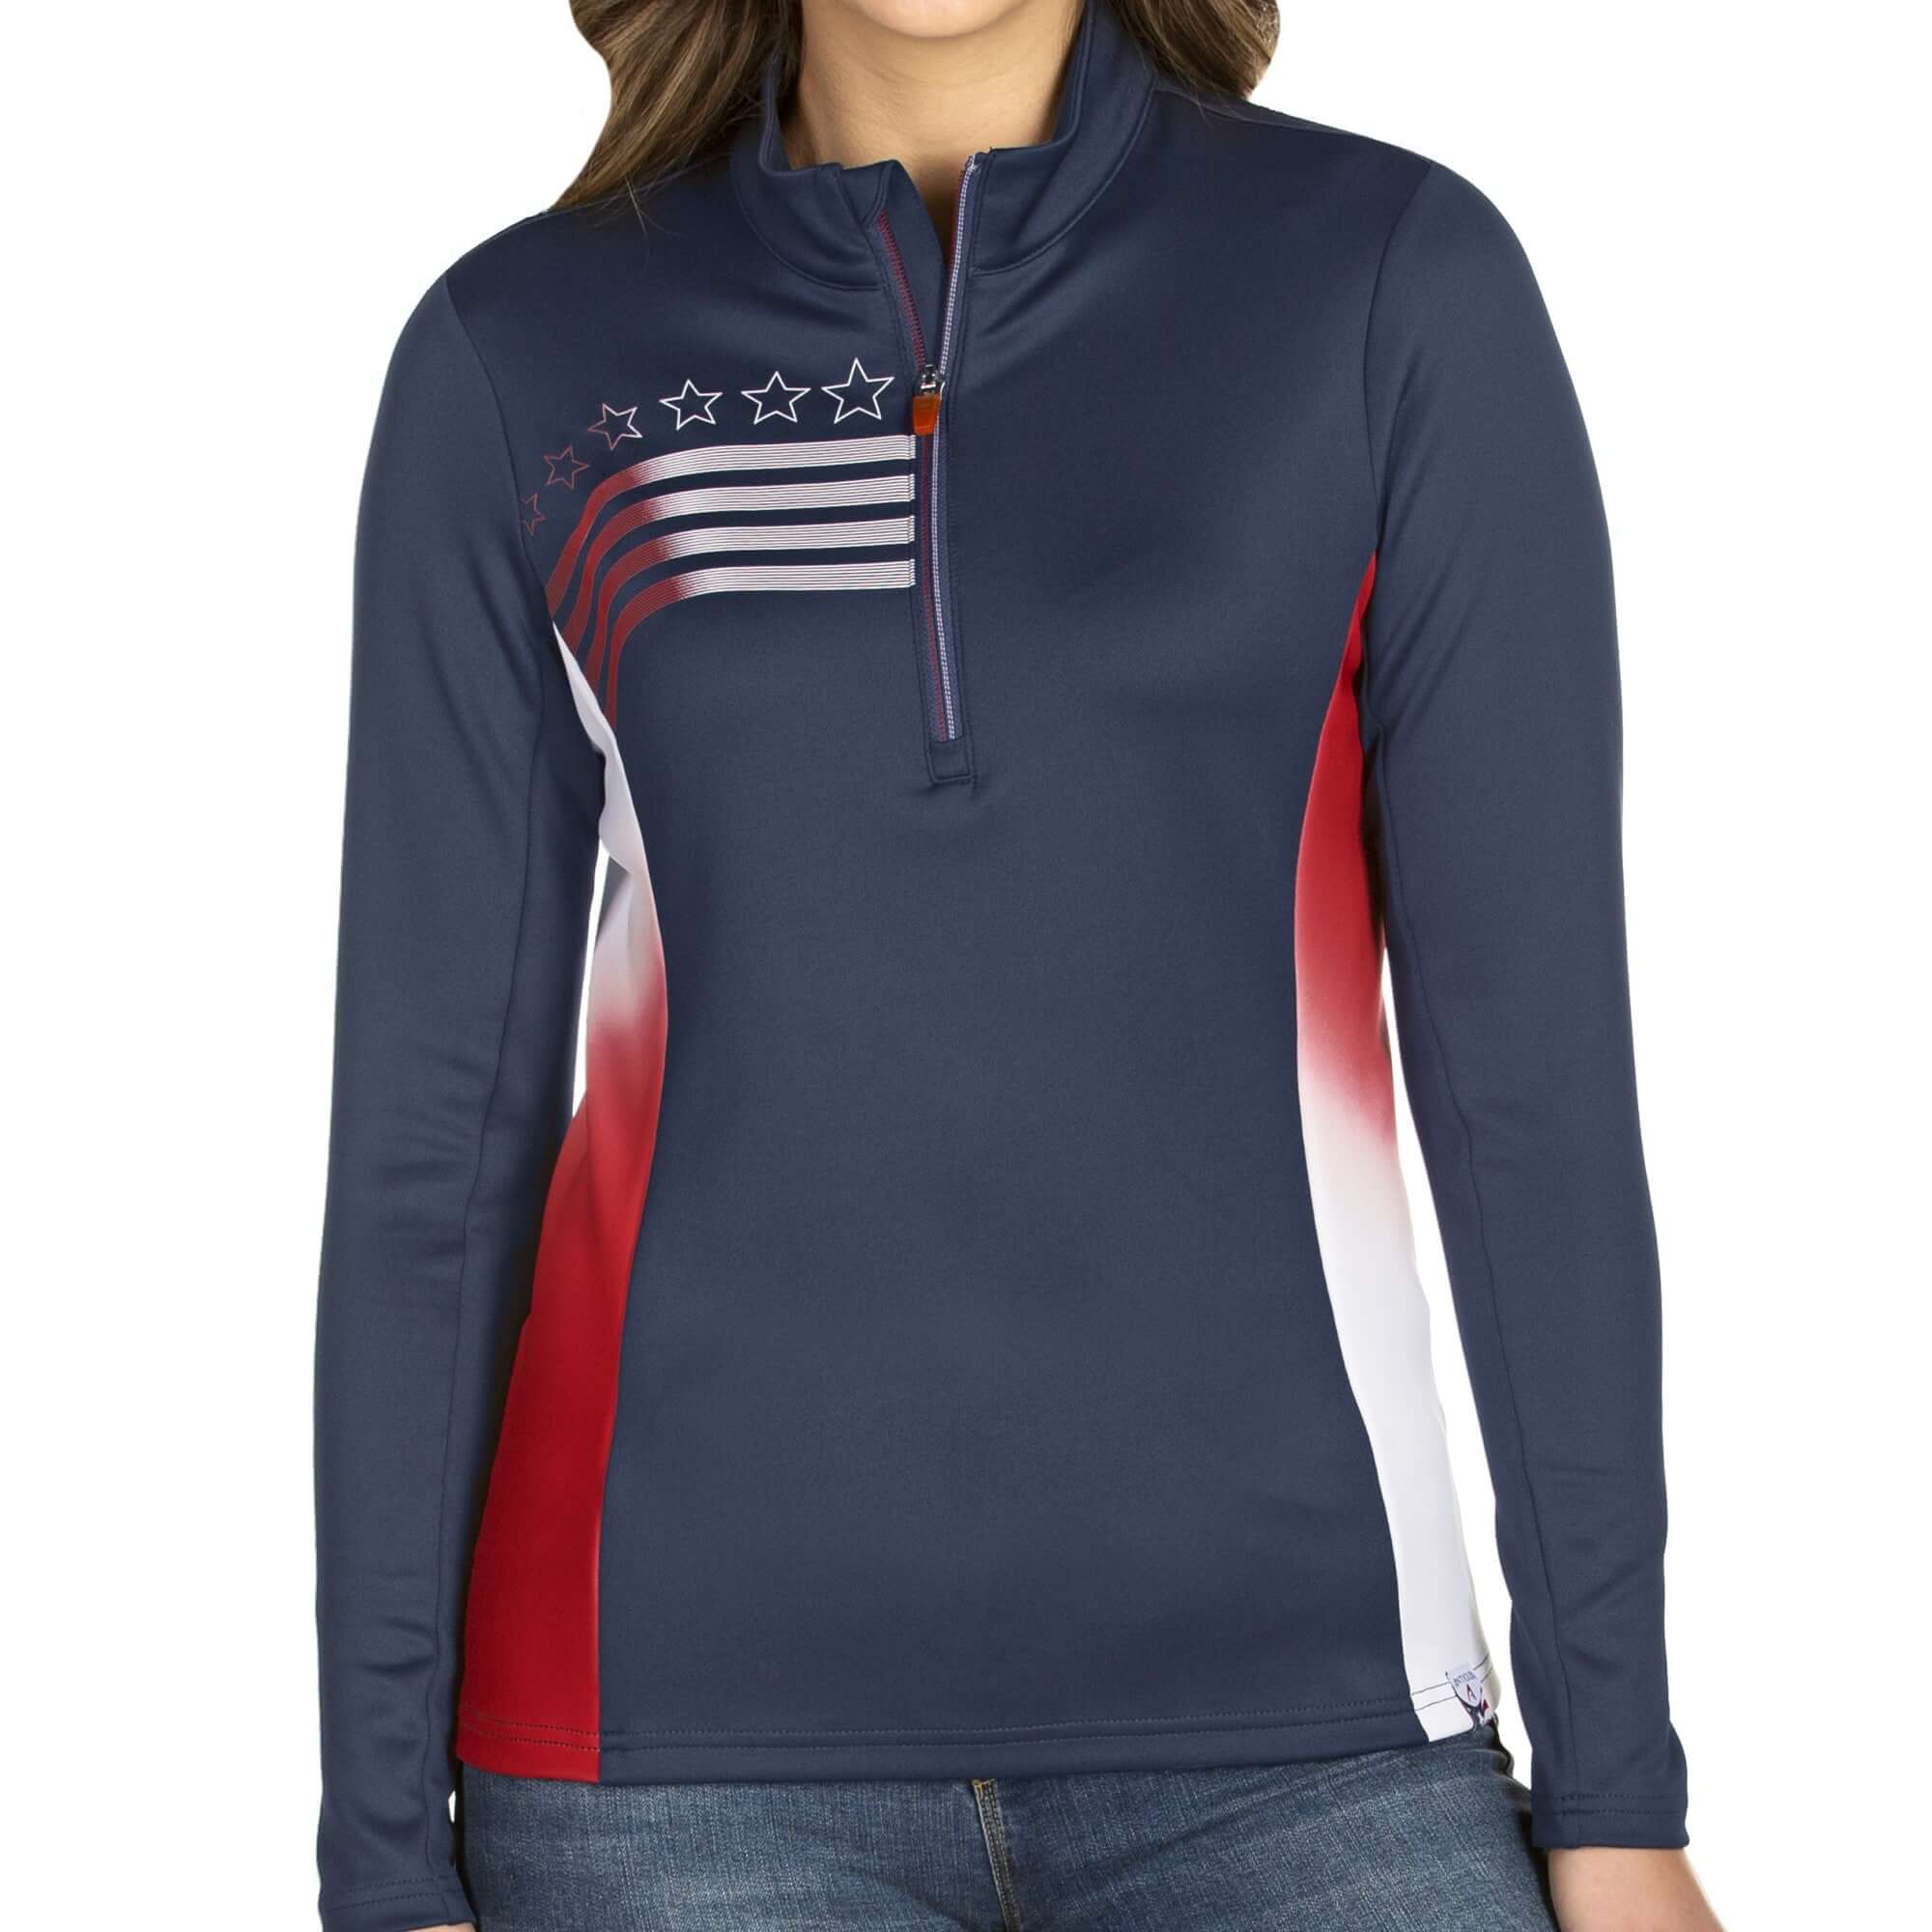 Women's Liberty 1/4 Zip Performance Golf Shirt - the flag shirts